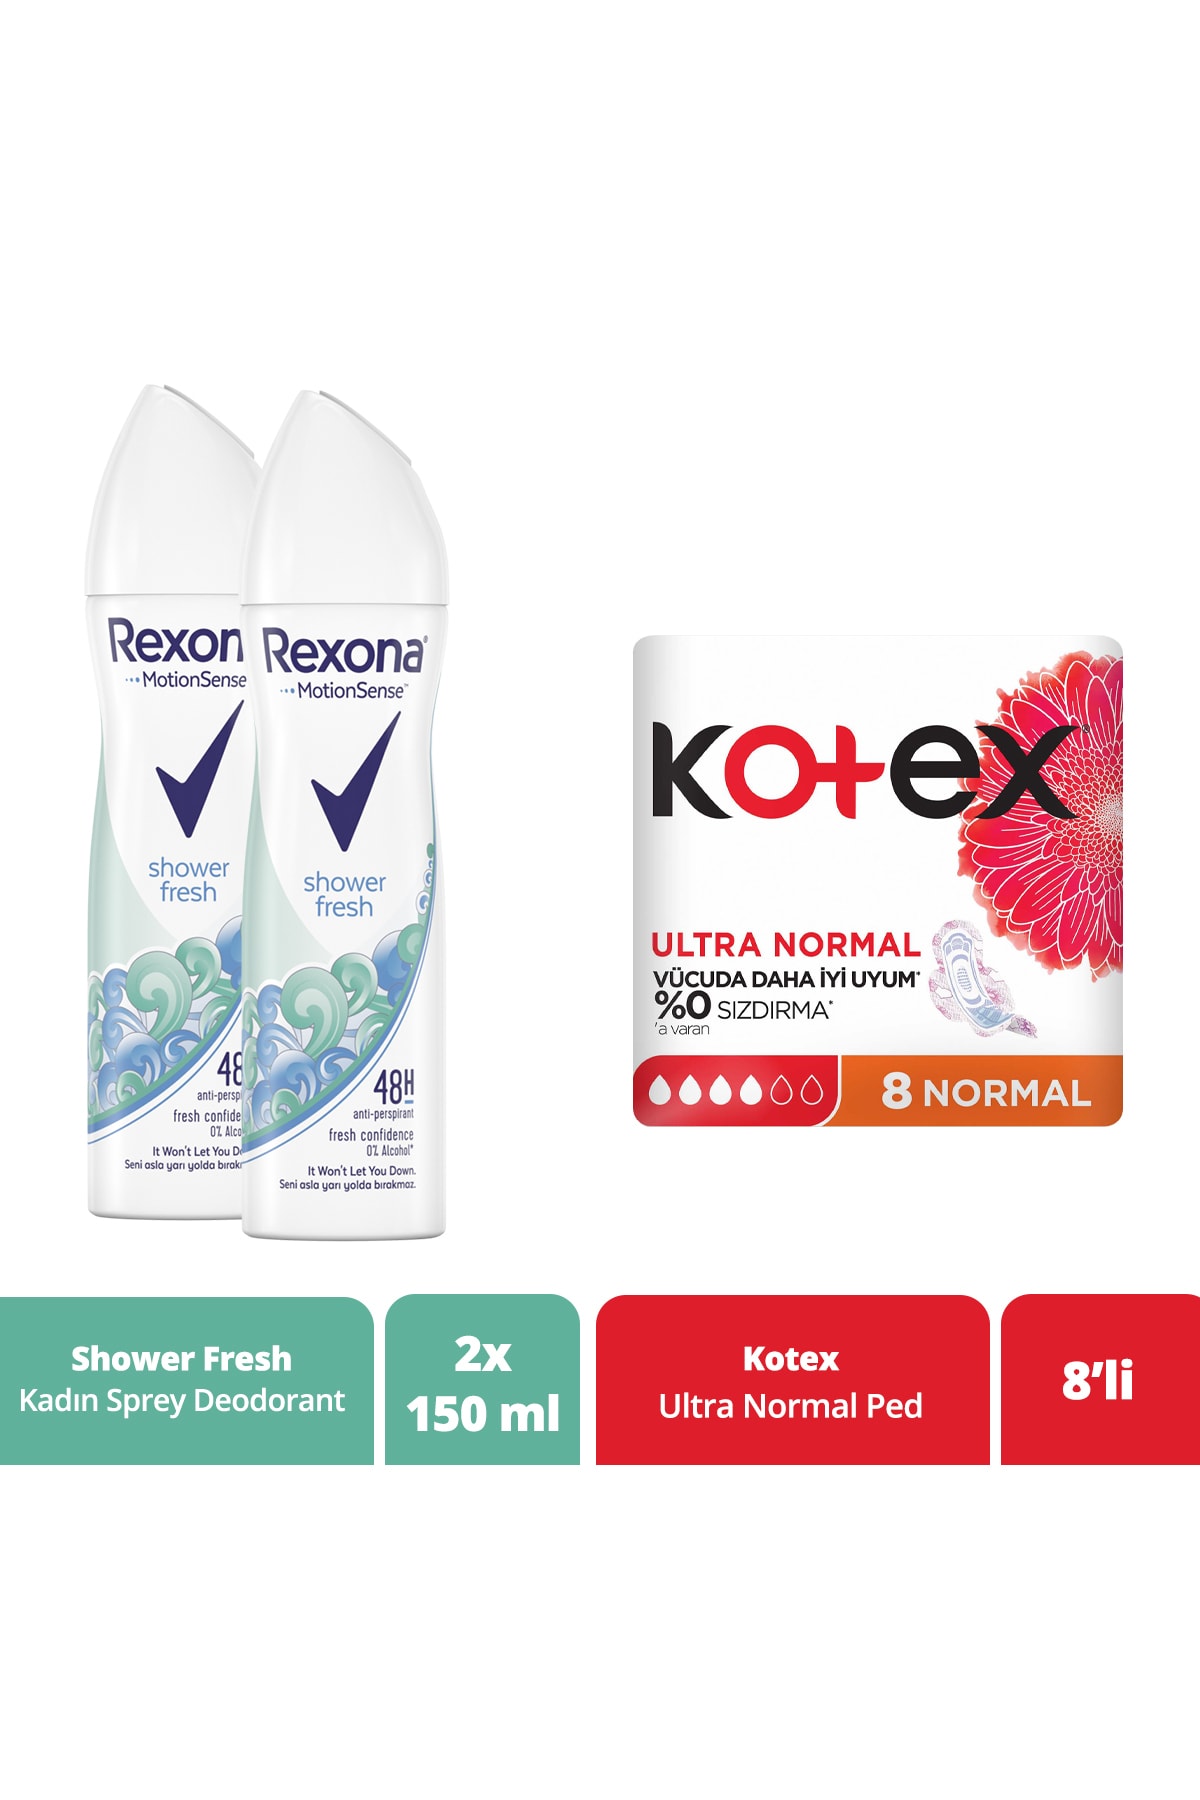 Rexona Antiperspirant Kadın Sprey Deodorant Shower Fresh 150 ml X2 + Kotex Ped Ultra Normal 8'li